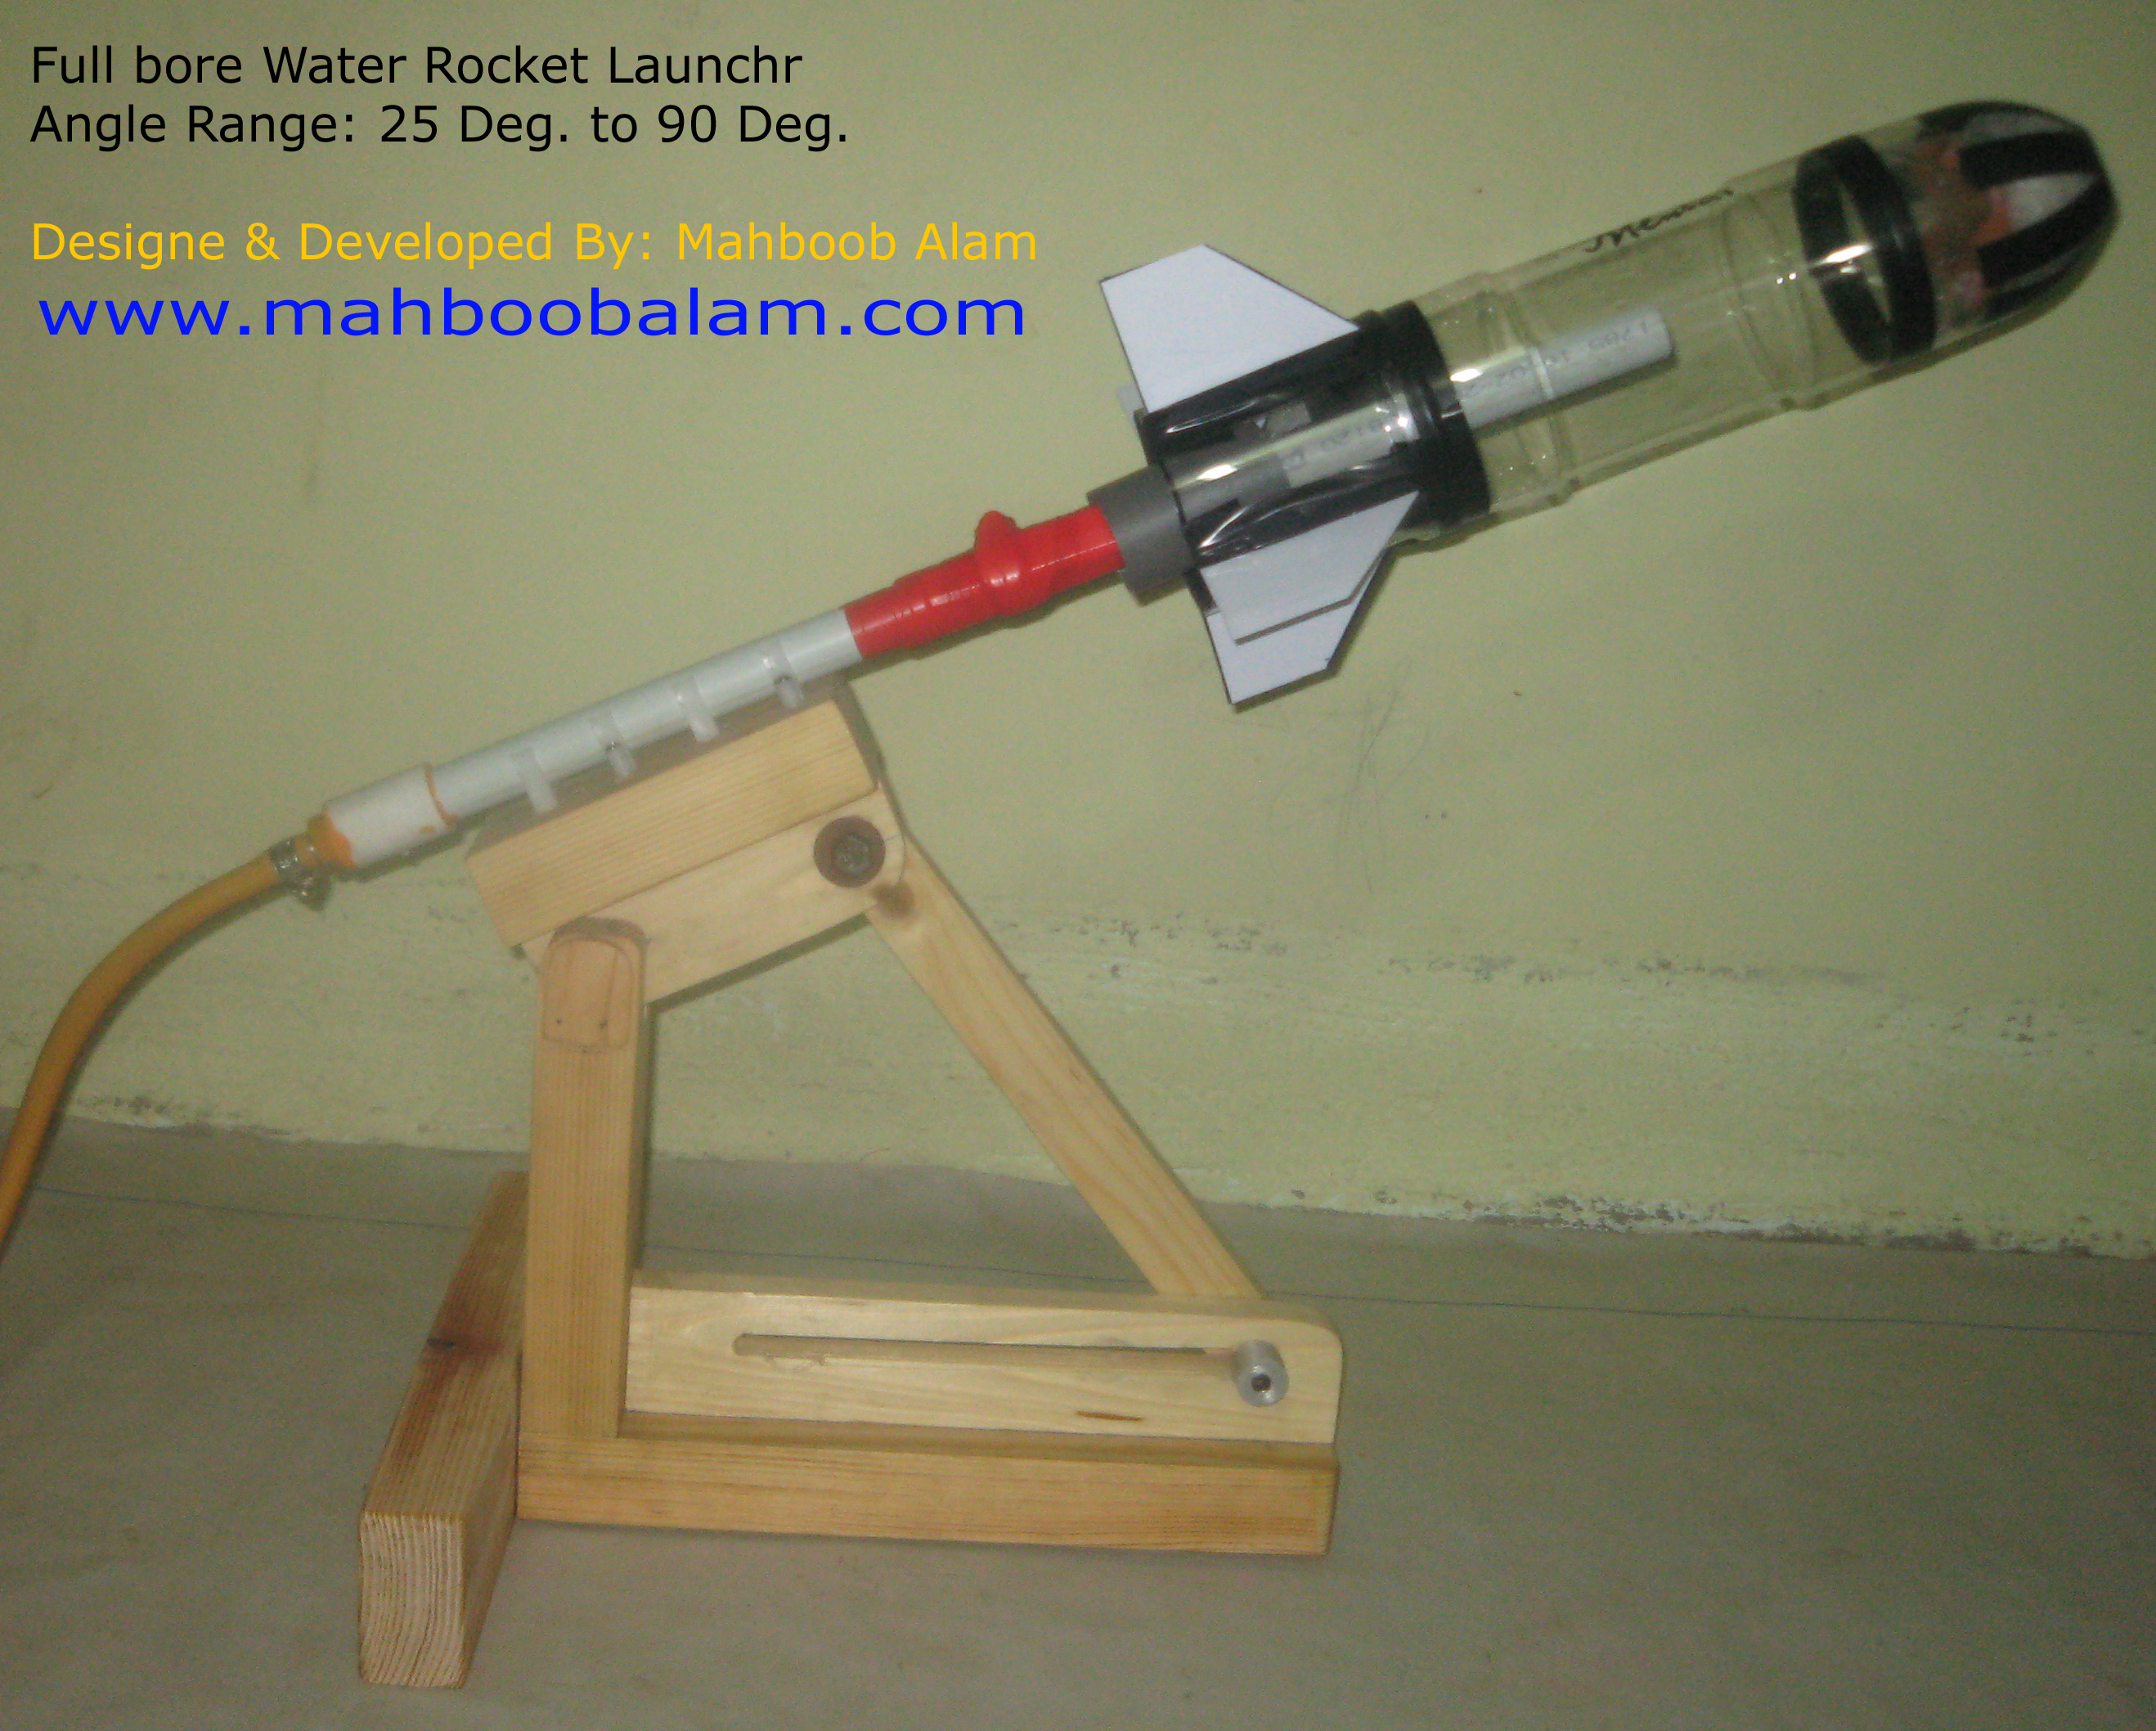 Full bore Water Rocket Launcher